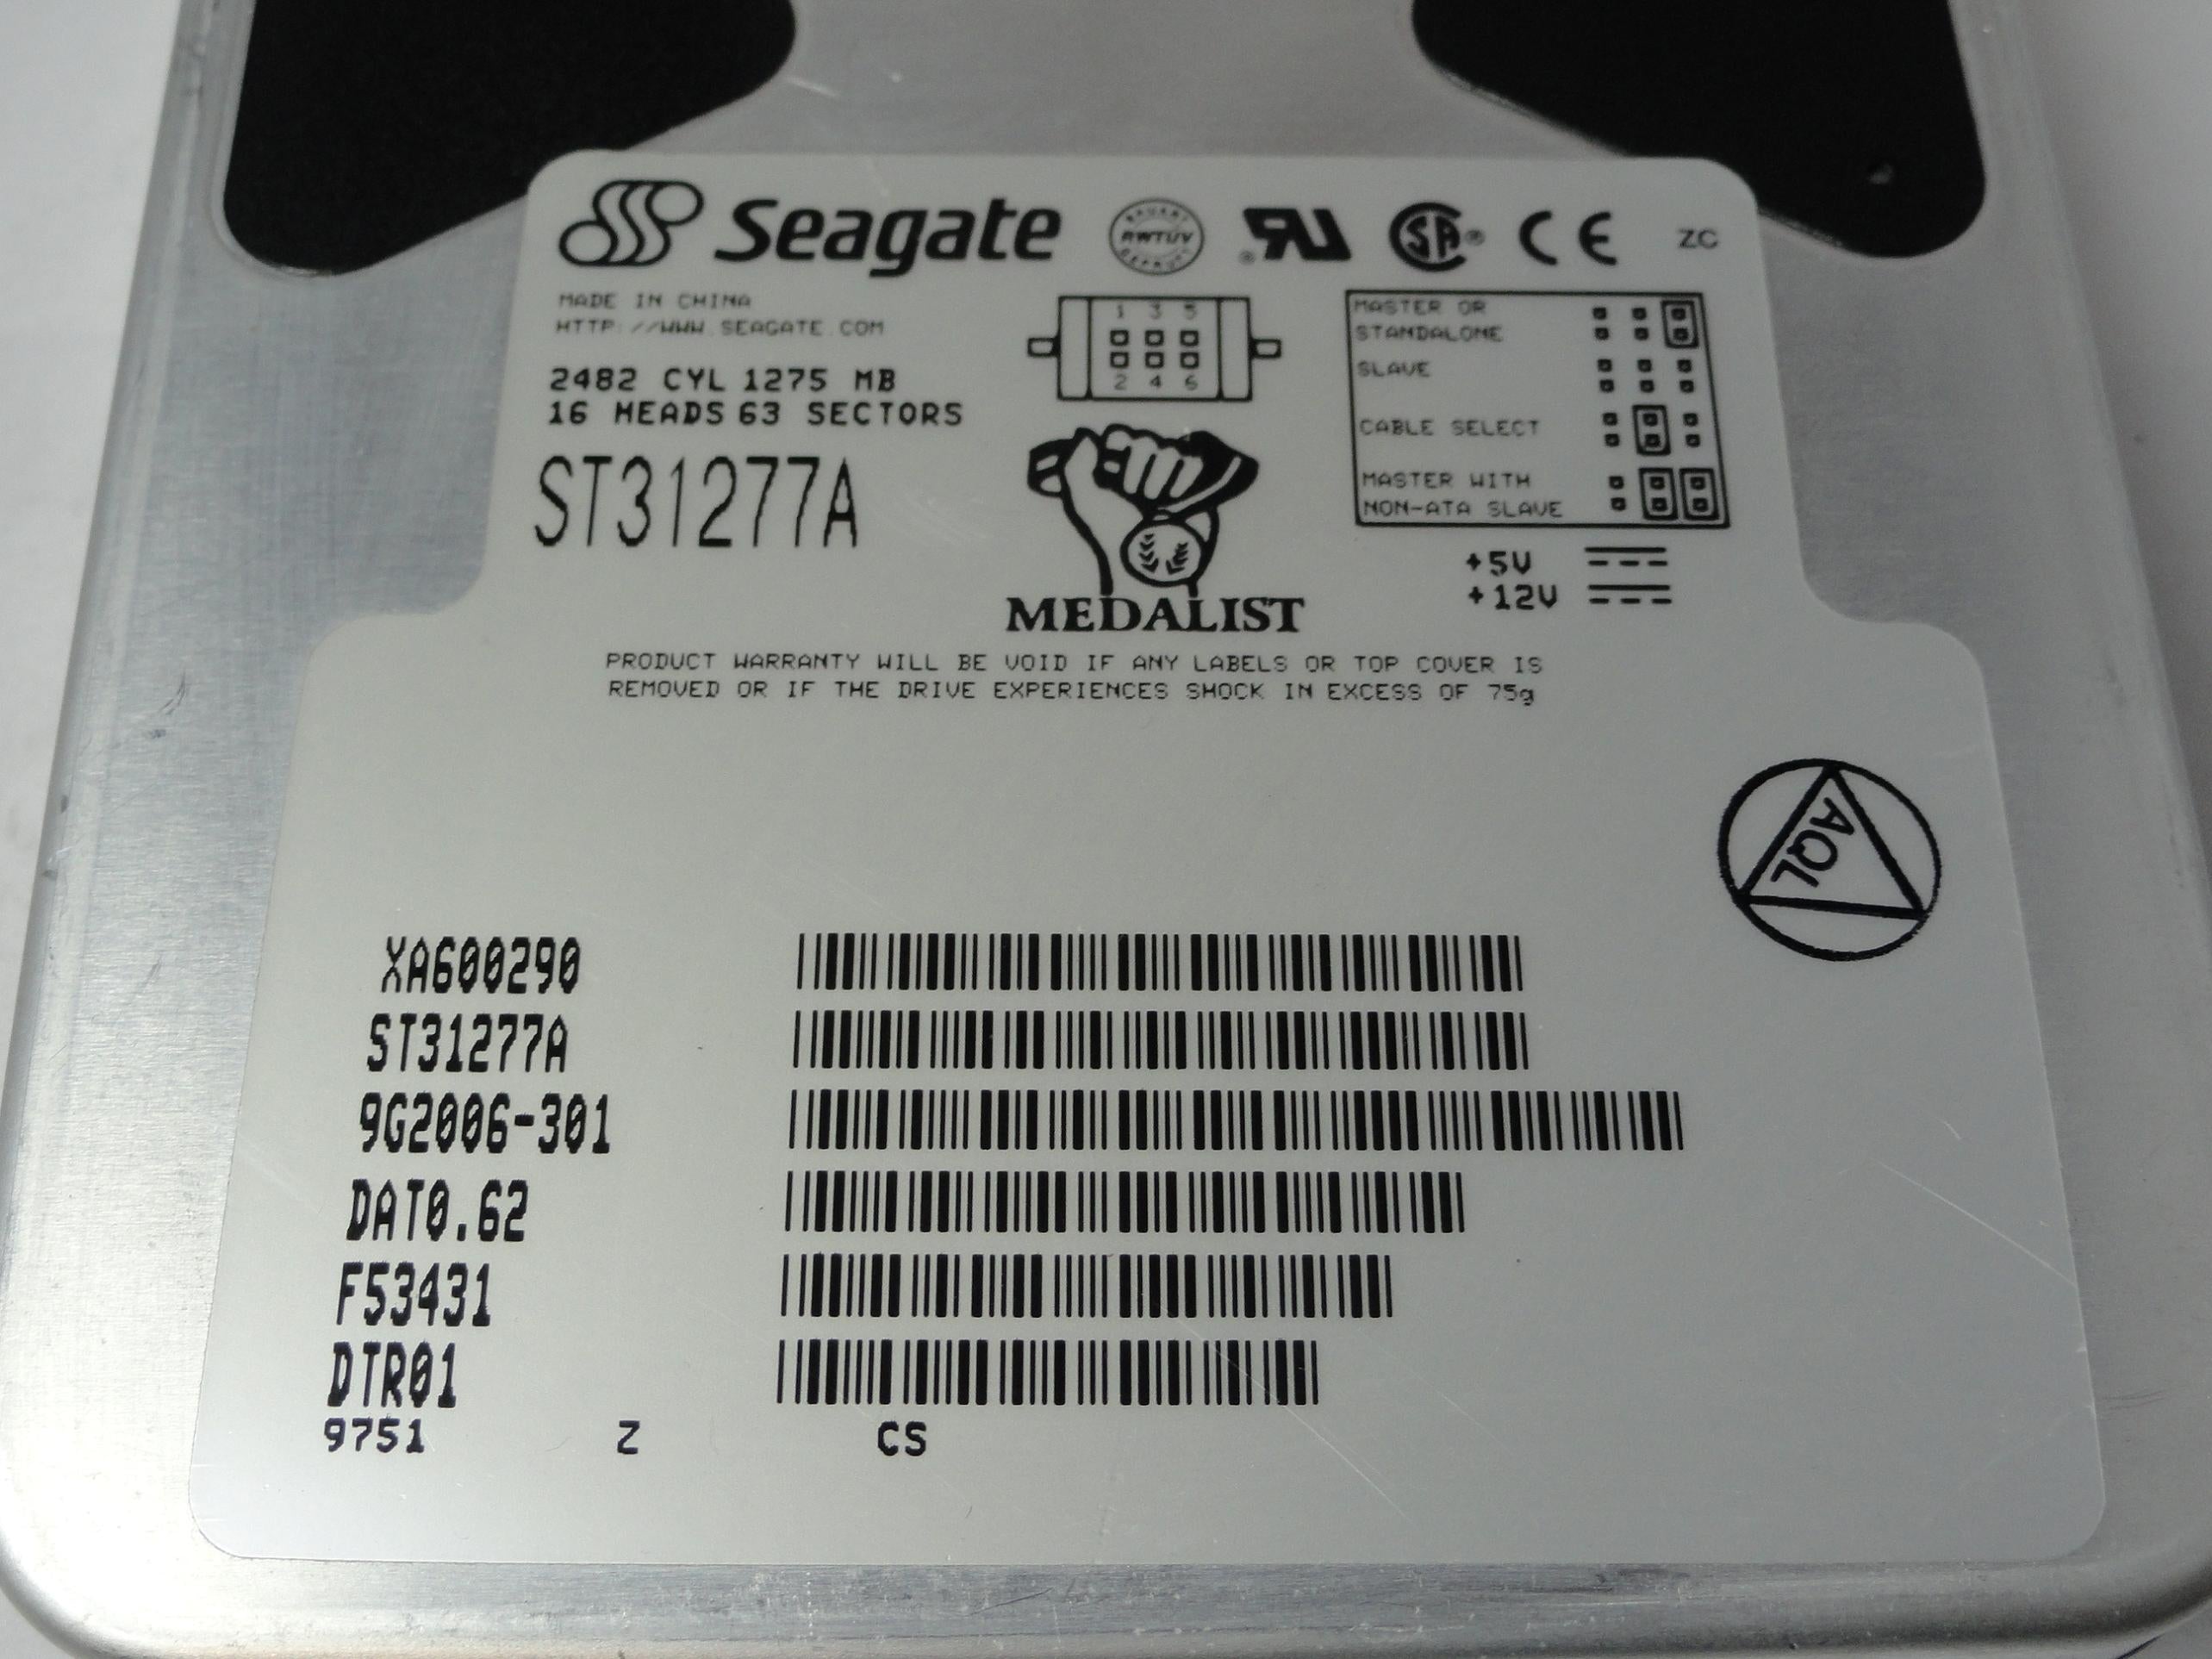 9G2006-301 - Seagate 1.3Gb IDE 4700rpm 3.5in HDD - Refurbished